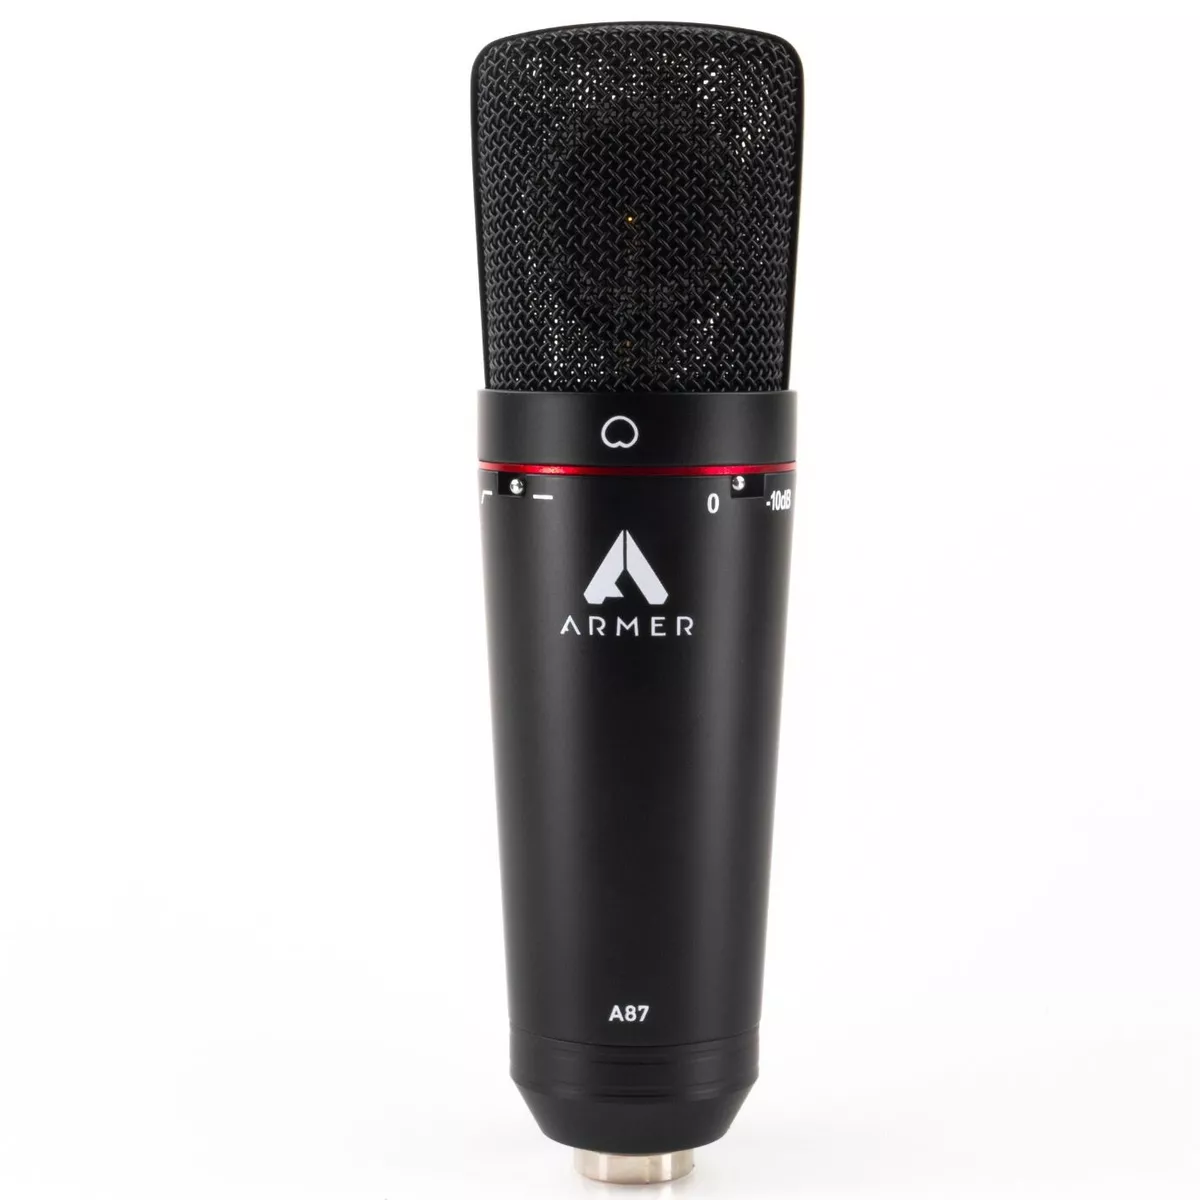 Microfone Armer A87 - em 3x Sem Juros